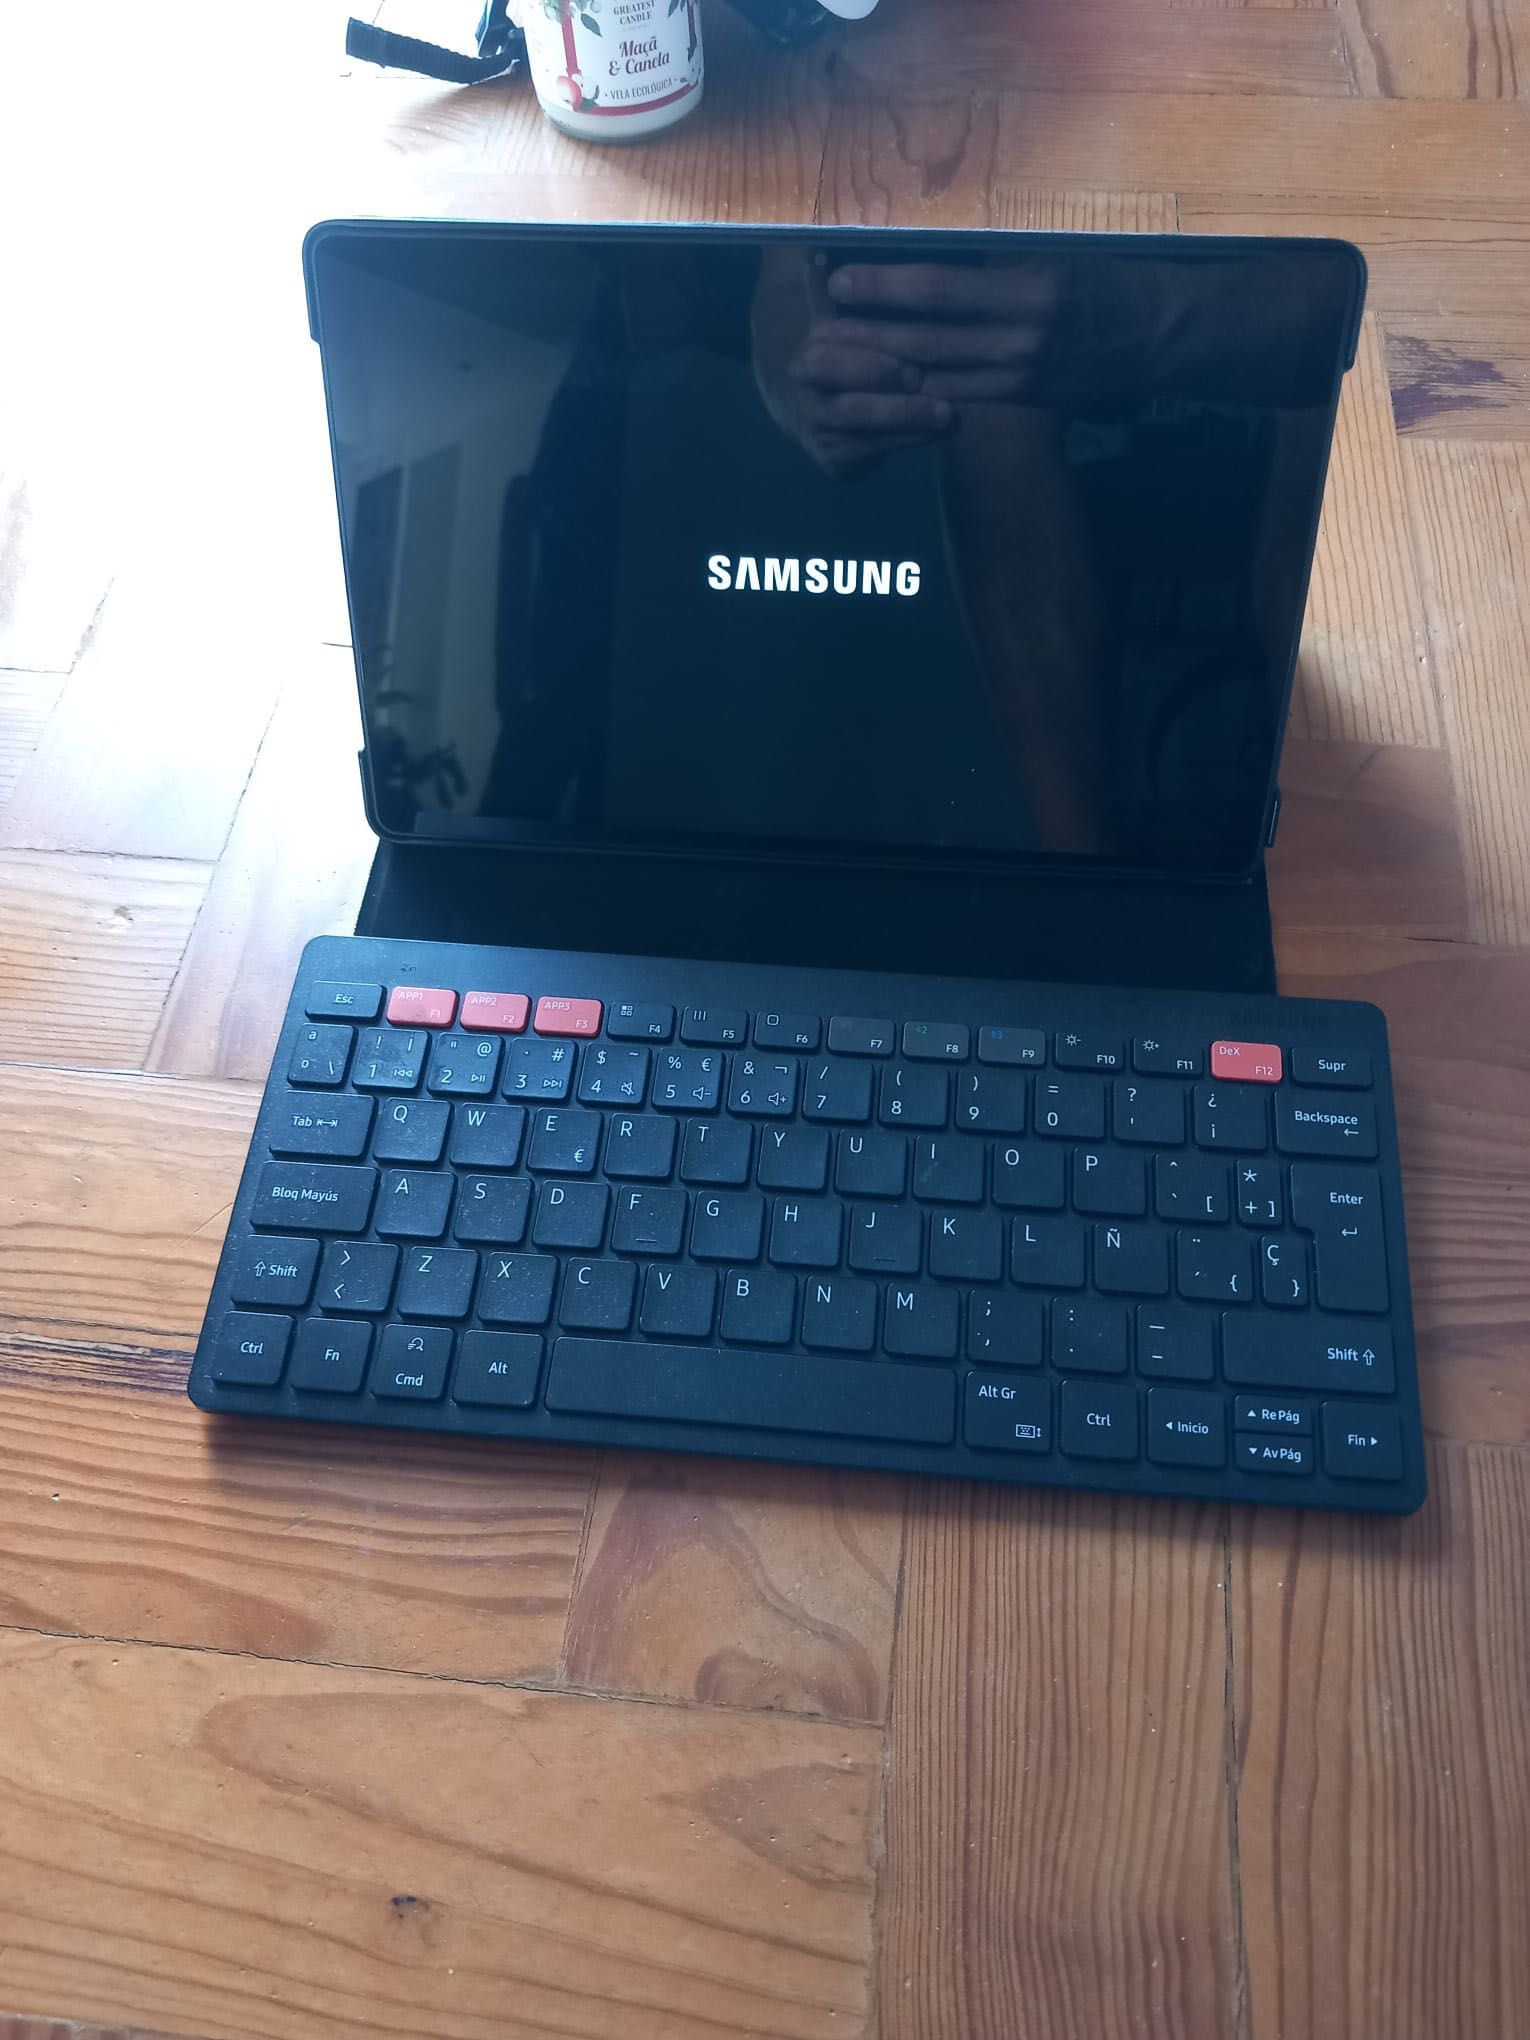 Samsung Galaxy A7 TAB + teclado remoto (Bluetooth)